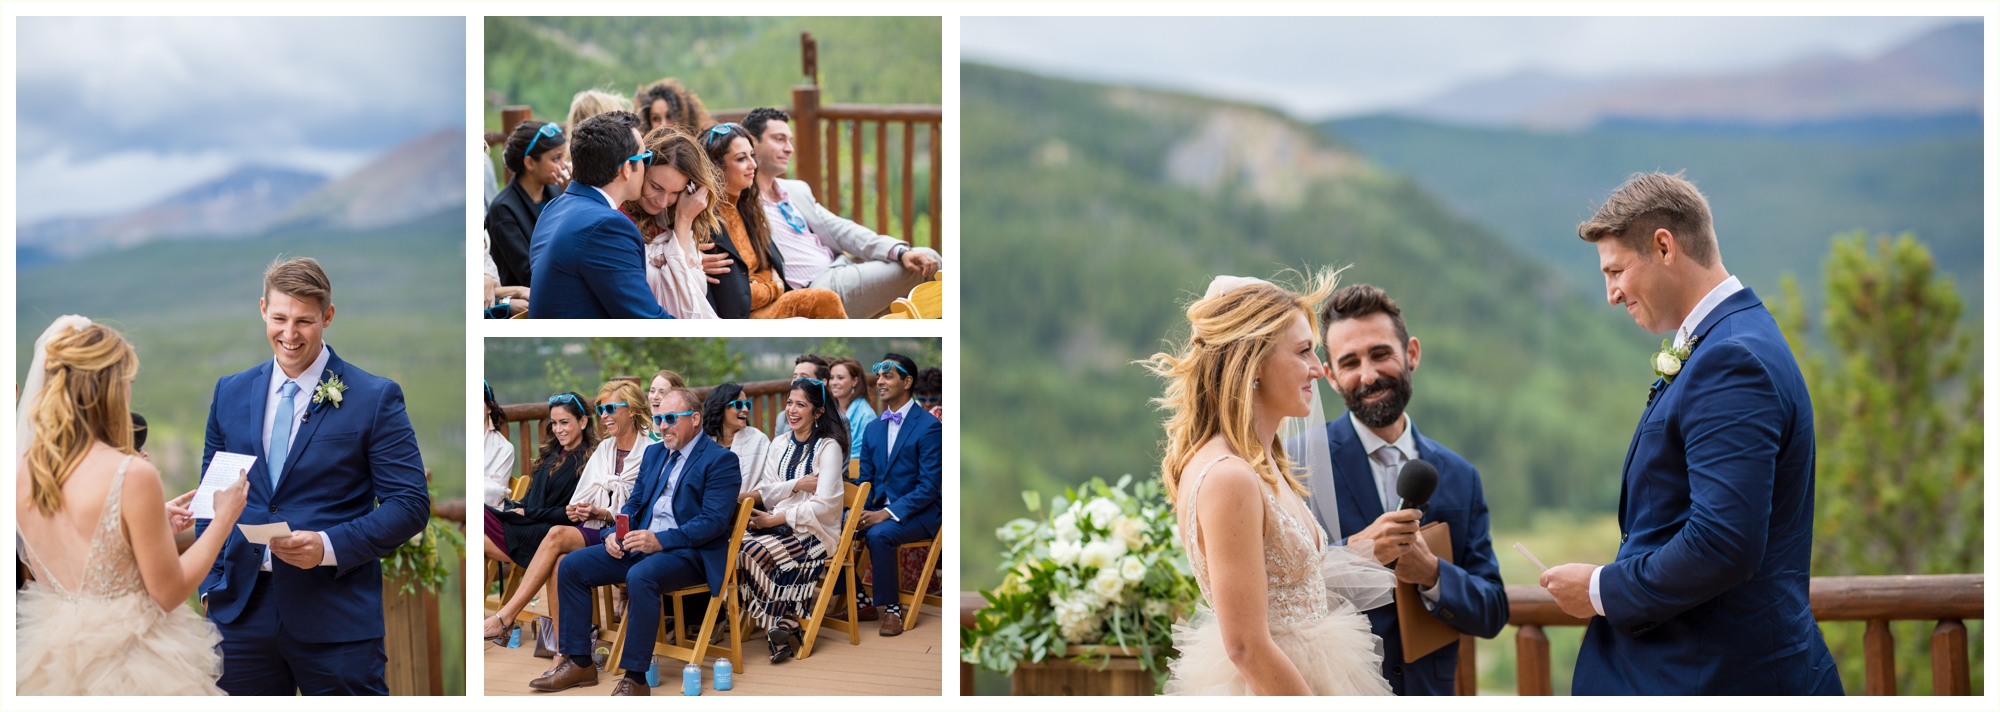 lodge at breckenridge wedding ceremony windy candid moments captured